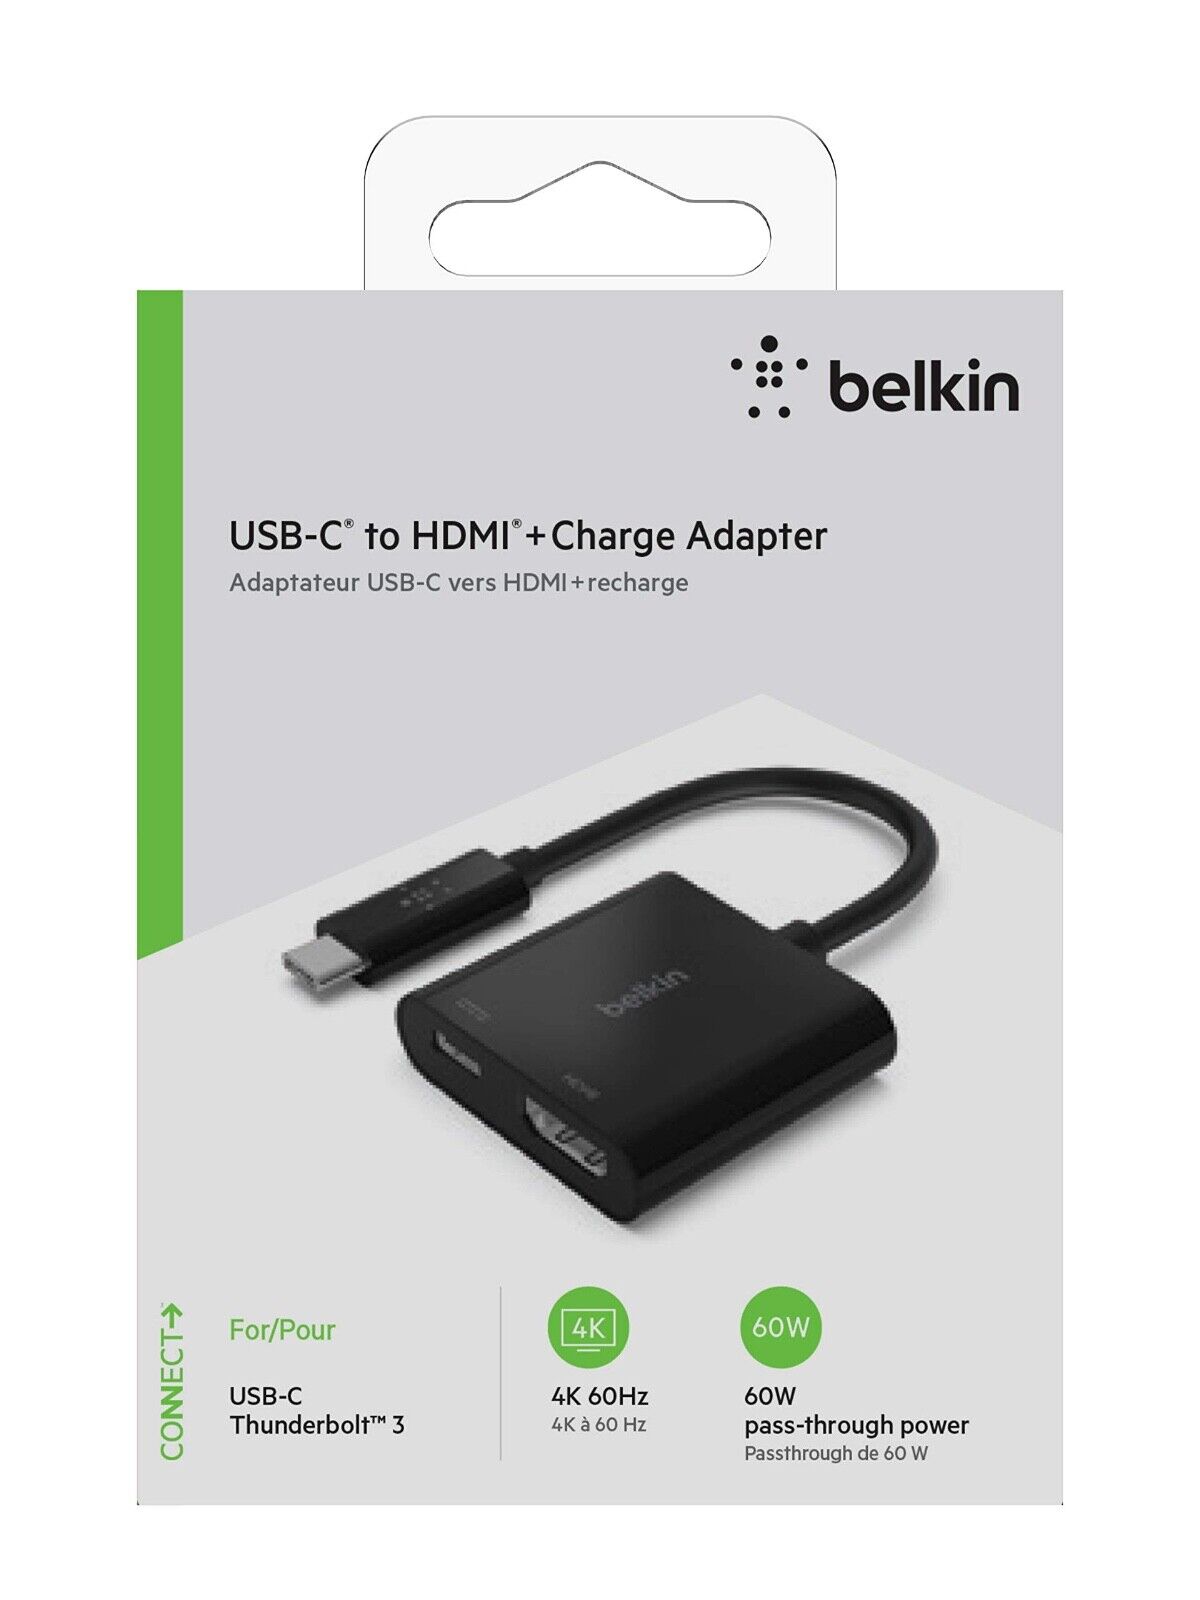 Belkin USB C to HDMI Adapter USB-C Charging Port 4K UHD 60W Power AVC002BTBK x2